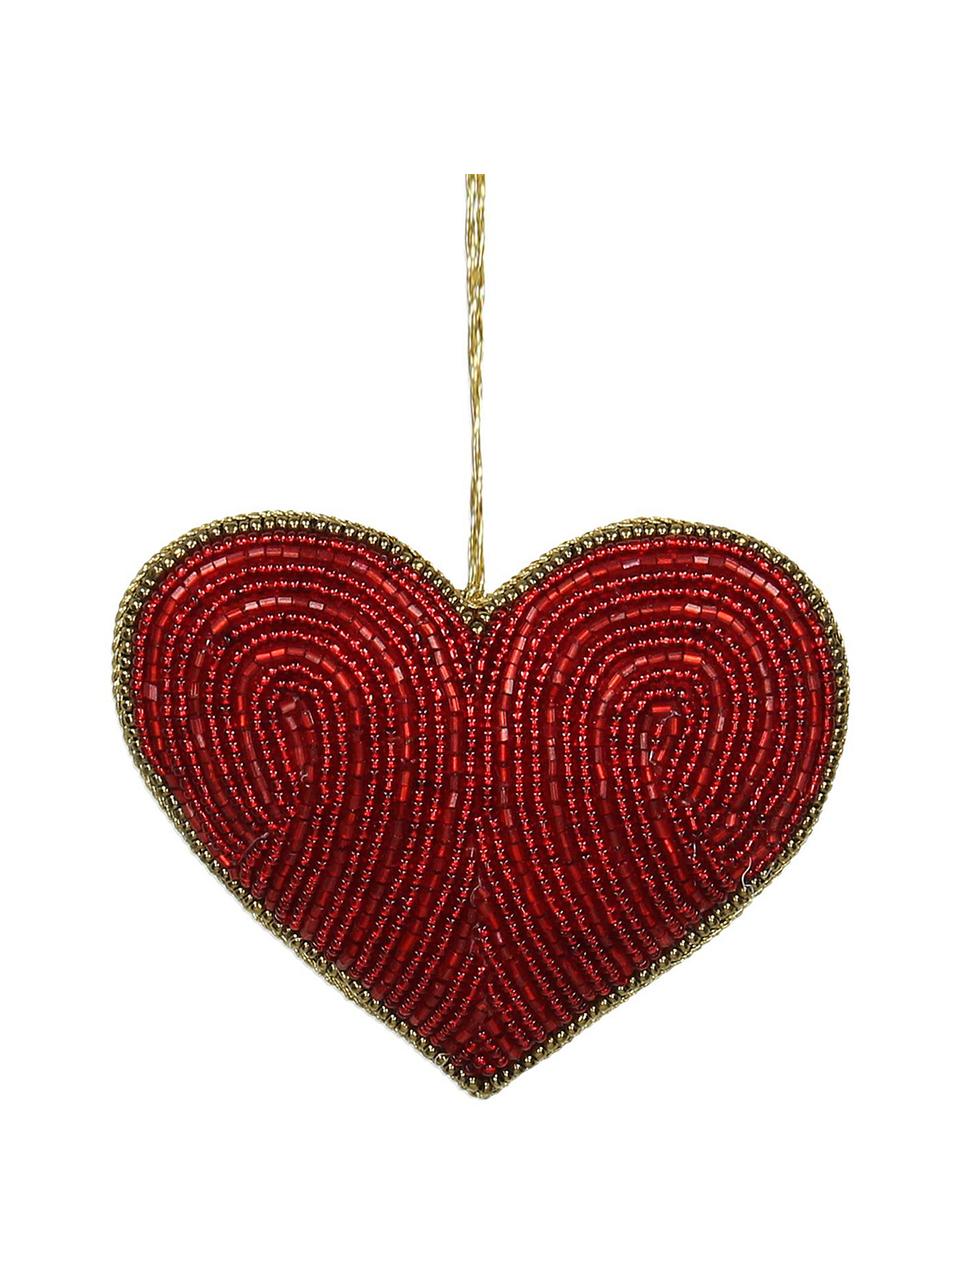 Adornos navideños Heart, 2 uds., Rojo, dorado, An 10 x Al 8 cm